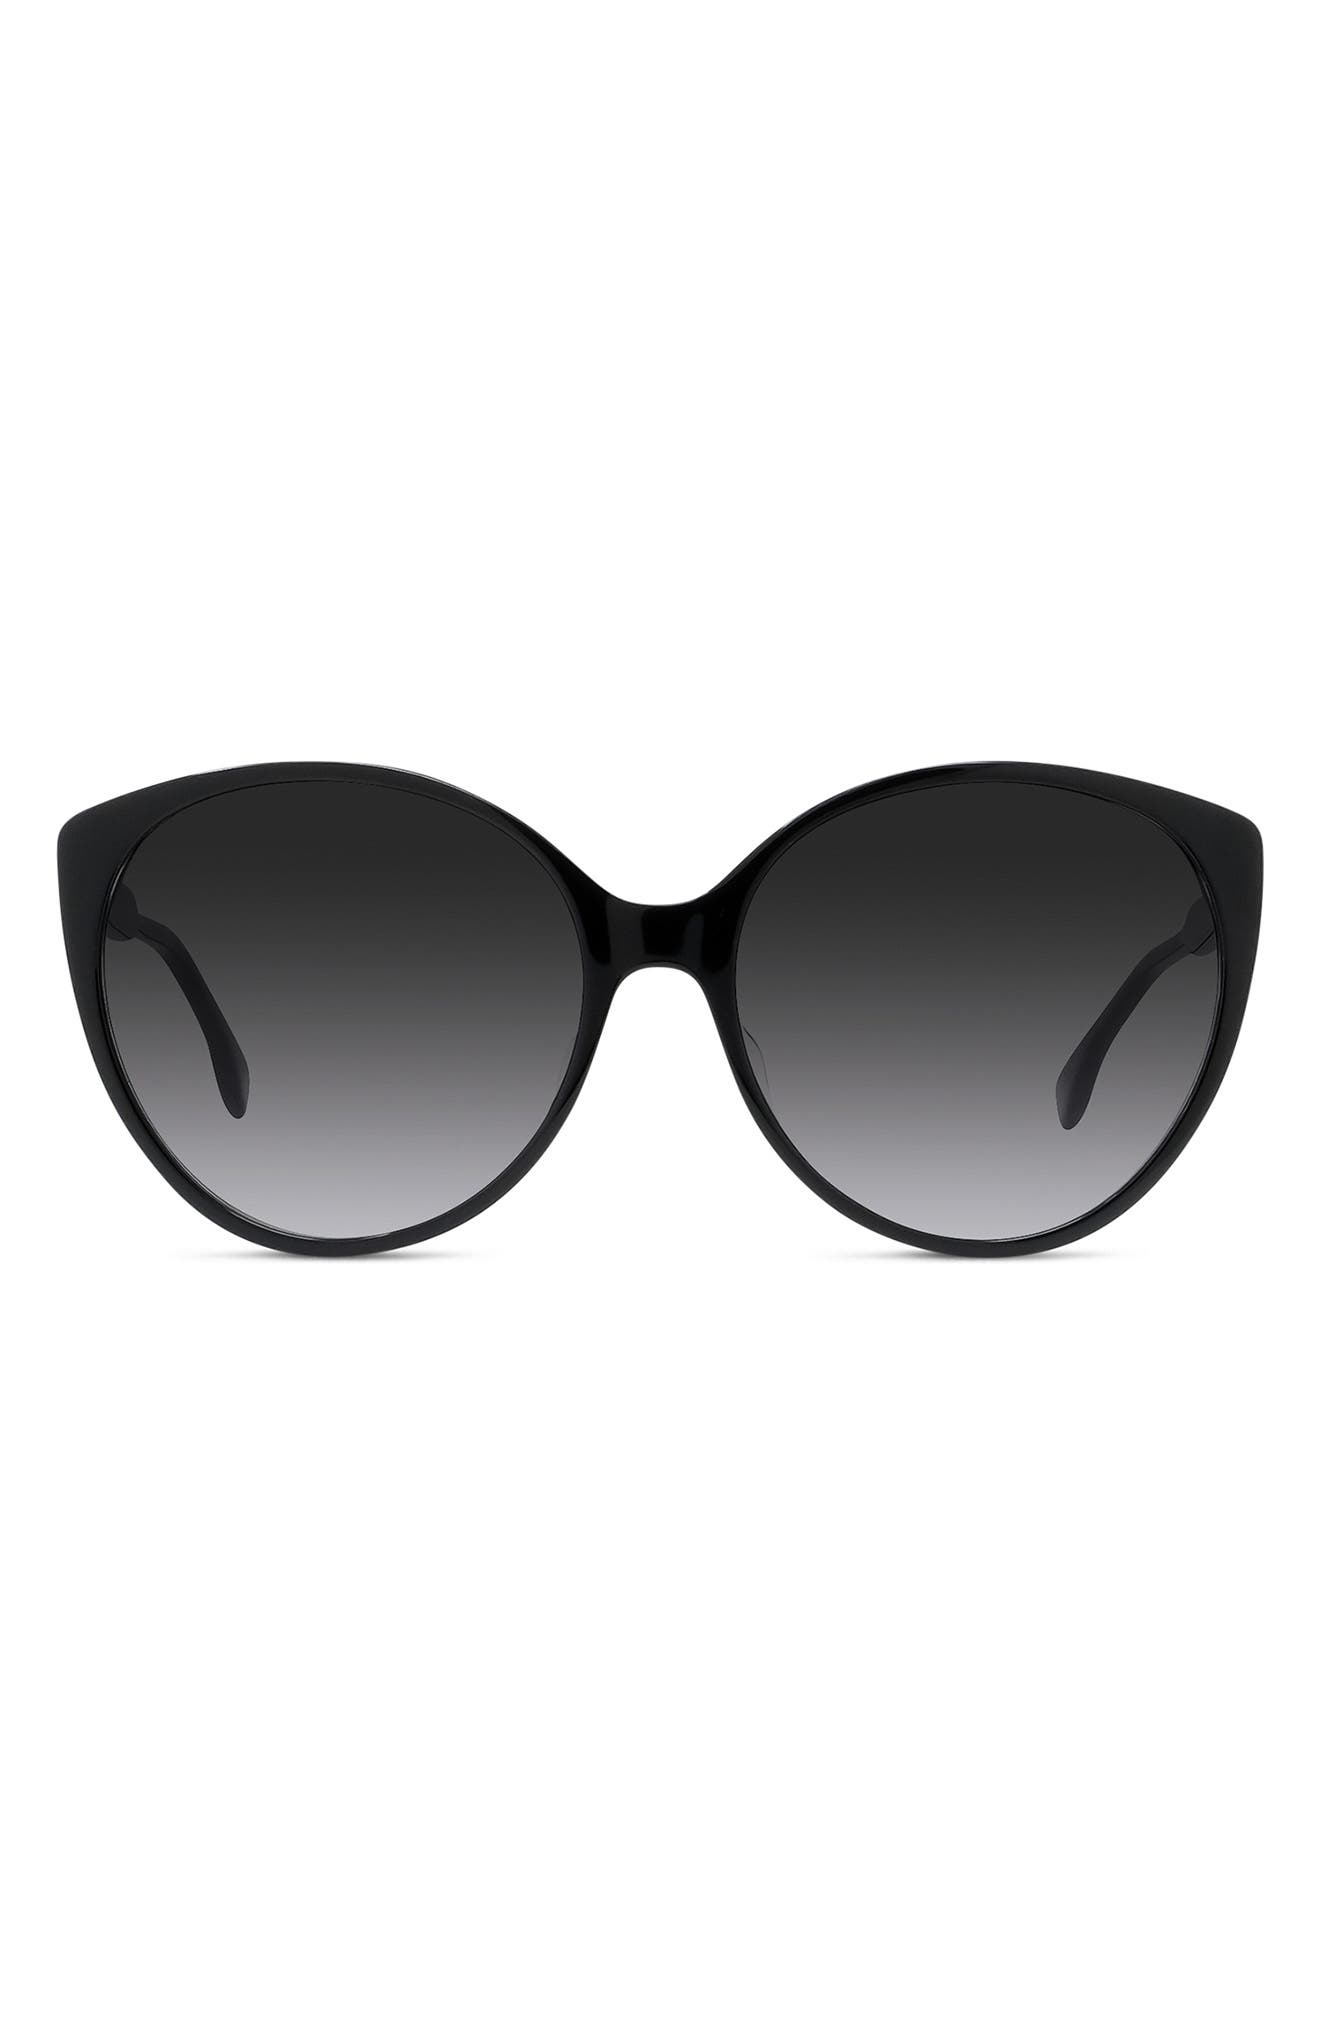 Fendi Fine 59mm Cat Eye Sunglasses in Shiny Black /Gradient Smoke at Nordstrom